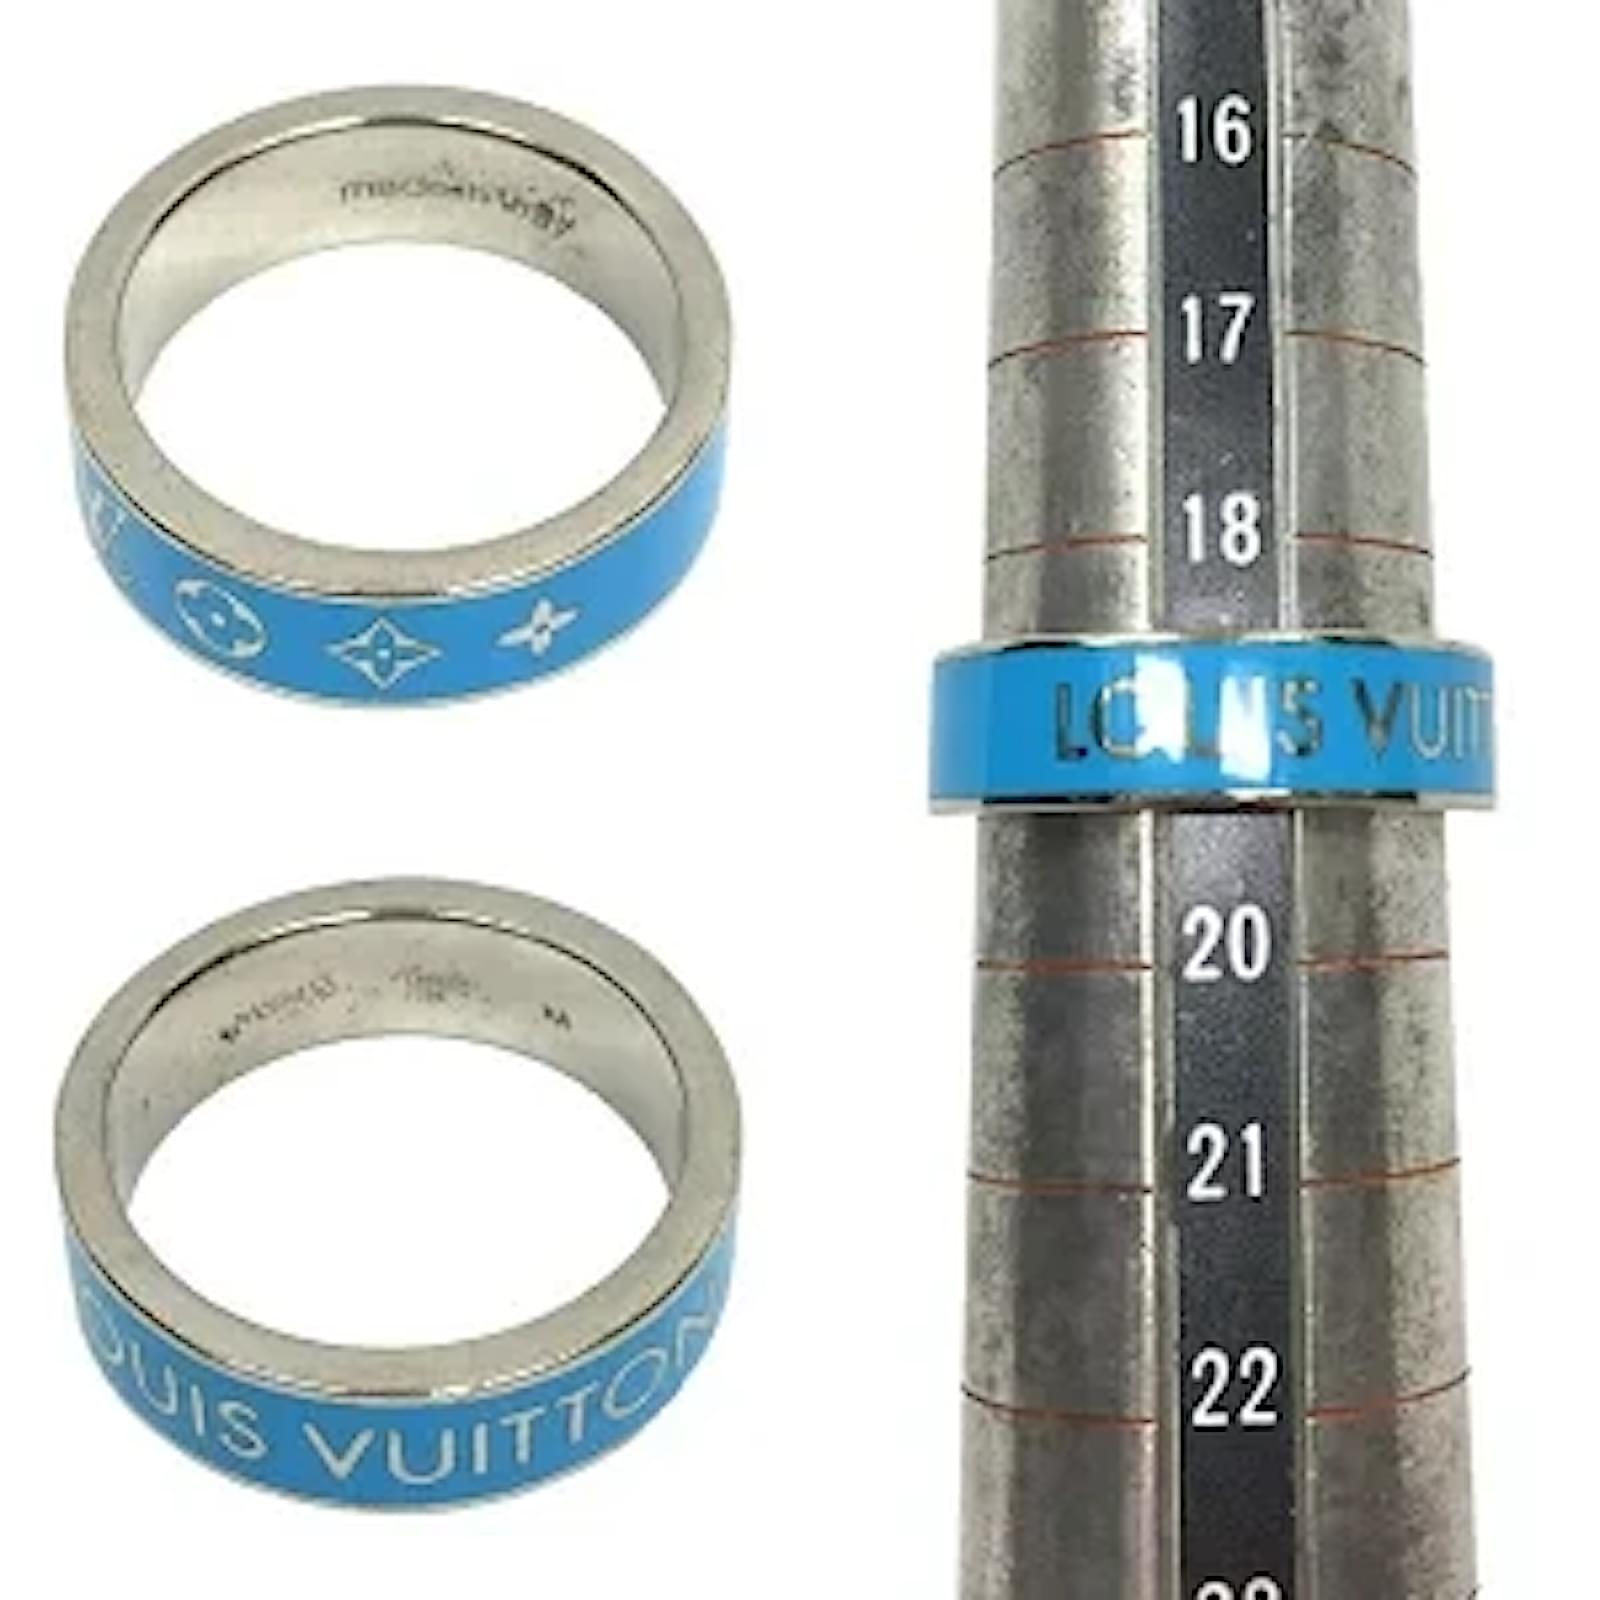 Clous ring Louis Vuitton Blue size S UK in Steel - 27681540